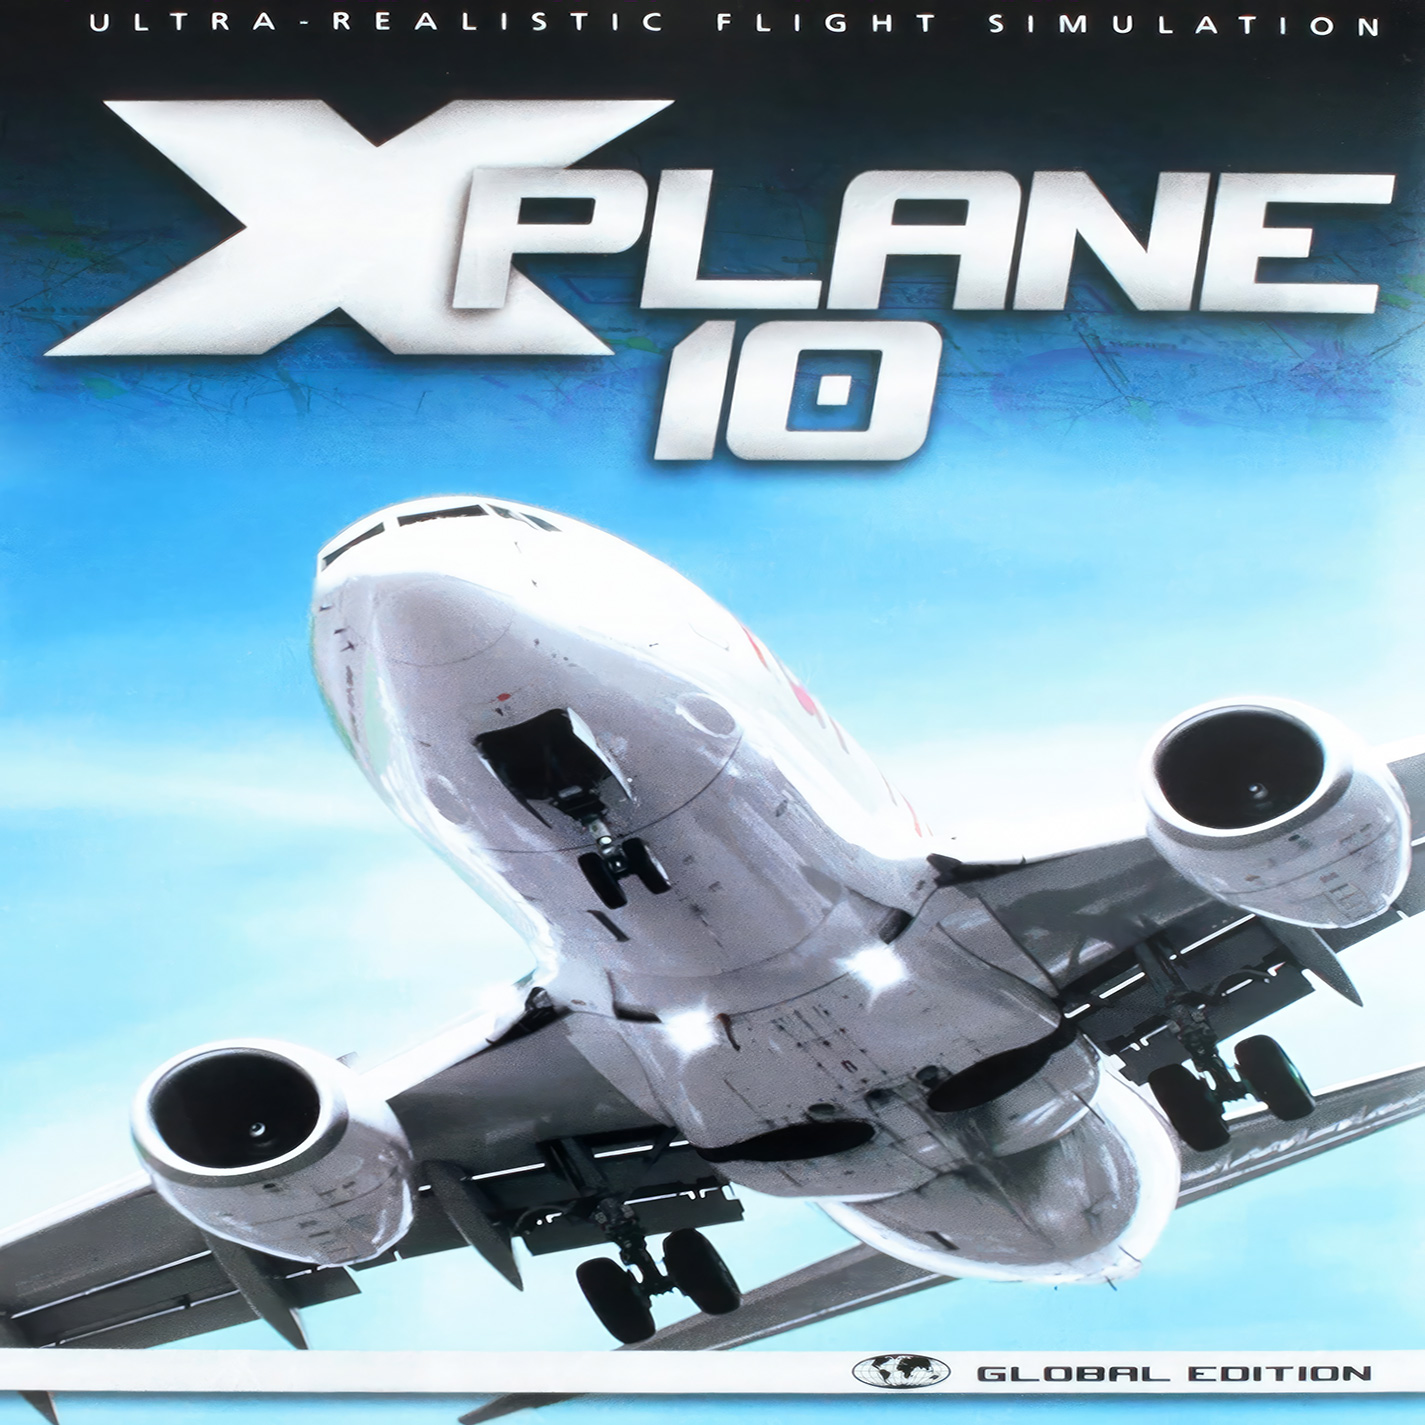 X-Plane 10 - predn CD obal